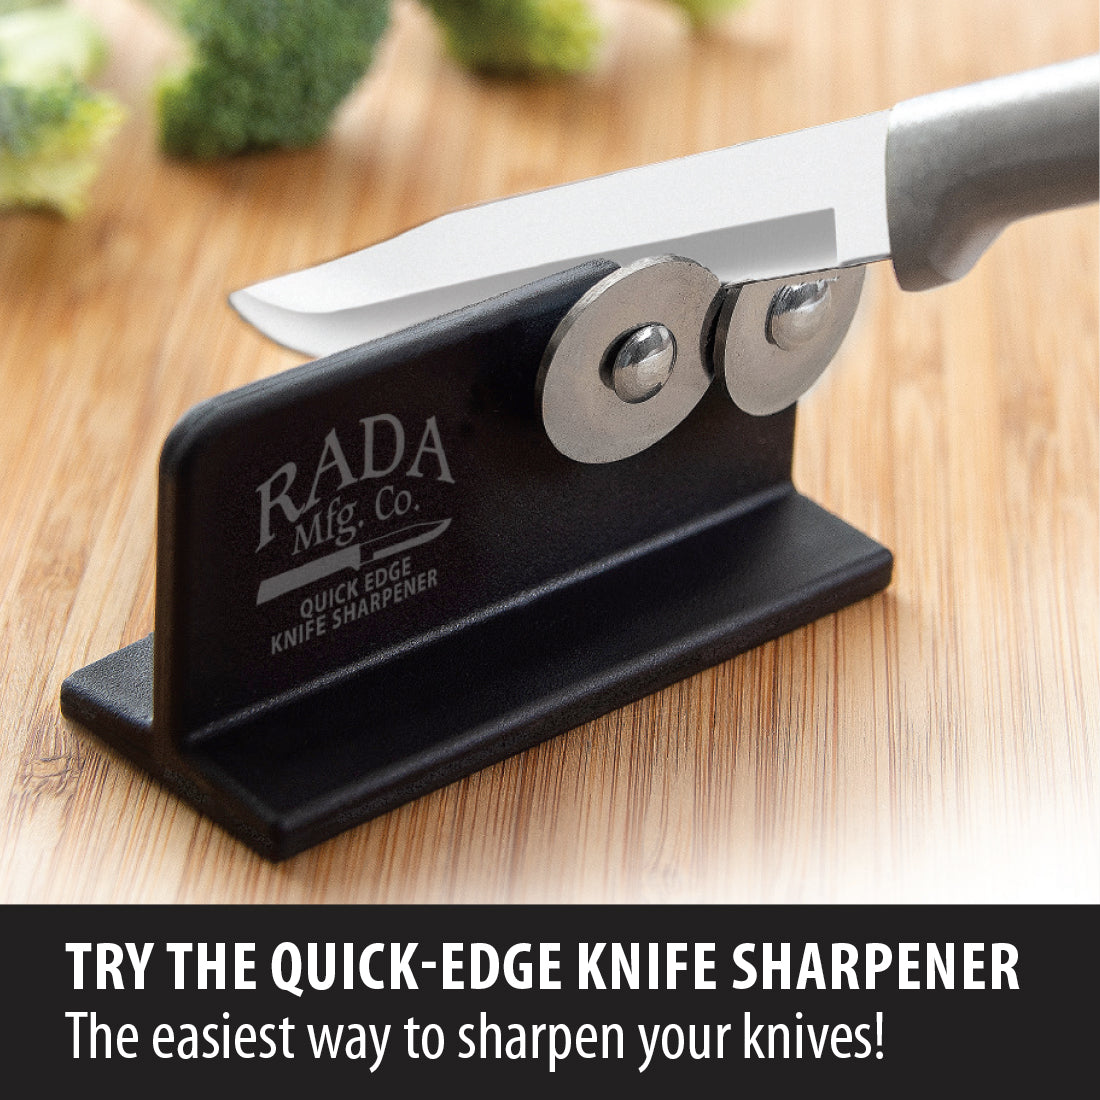 Best knife sharperners: We test 8 knife sharpeners with razor-sharp results